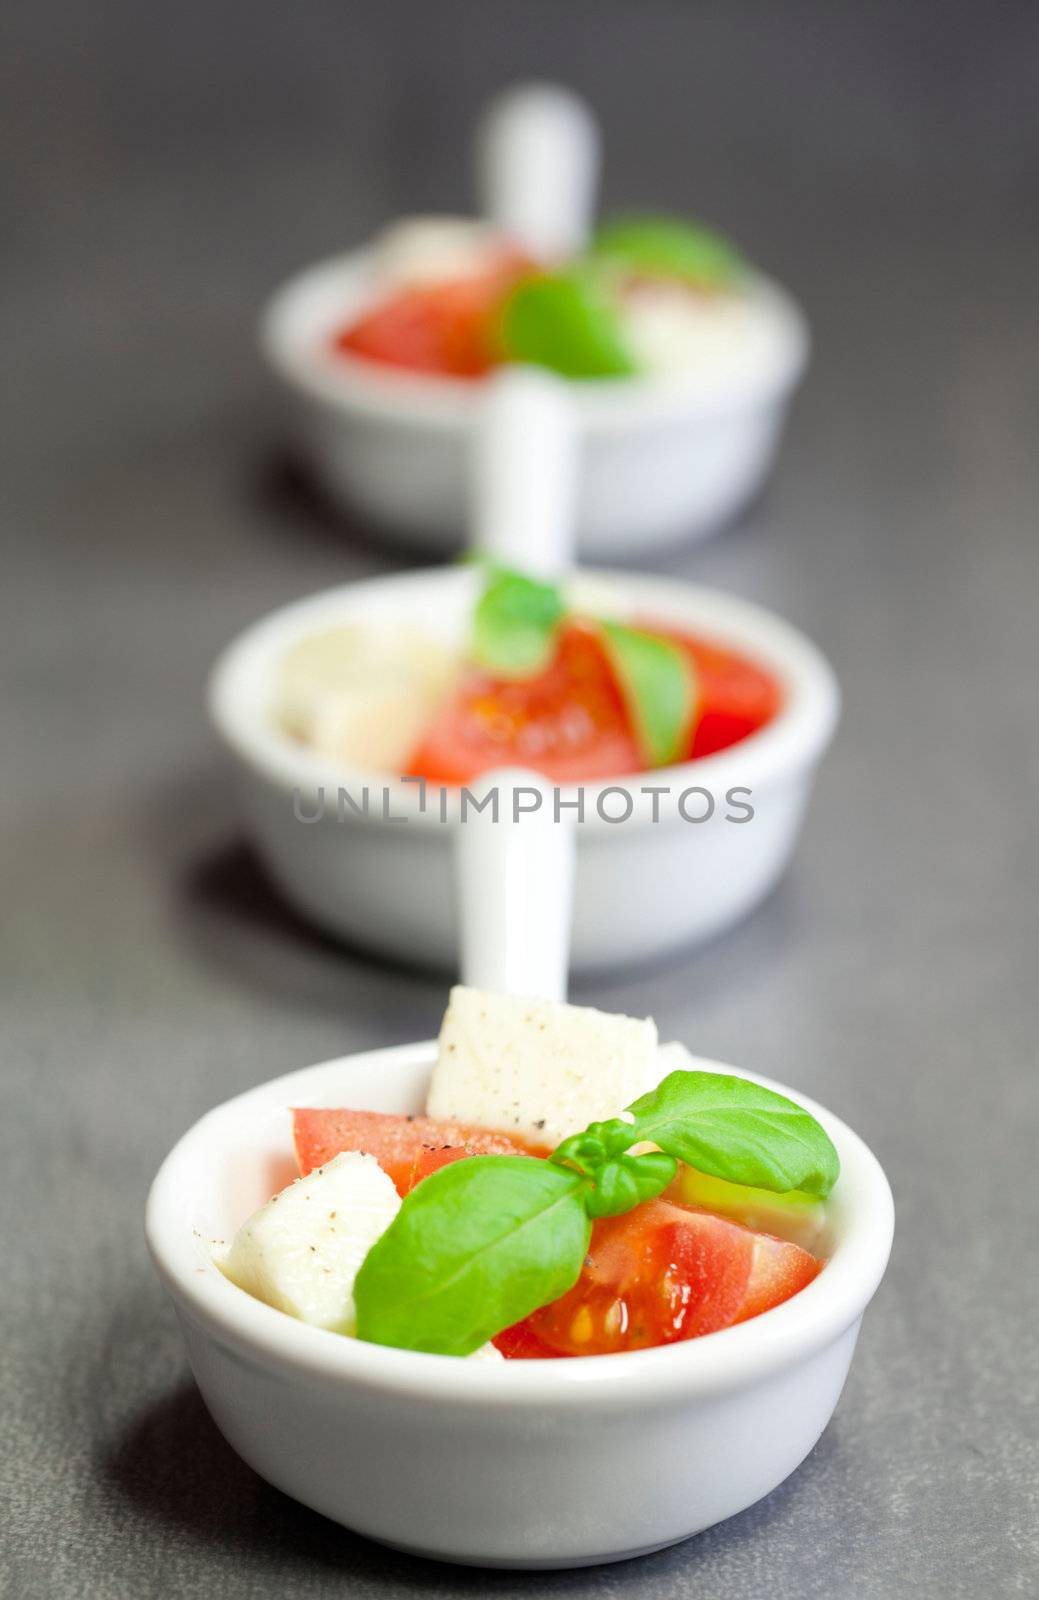 delicious italian salad in a ceramic bowl